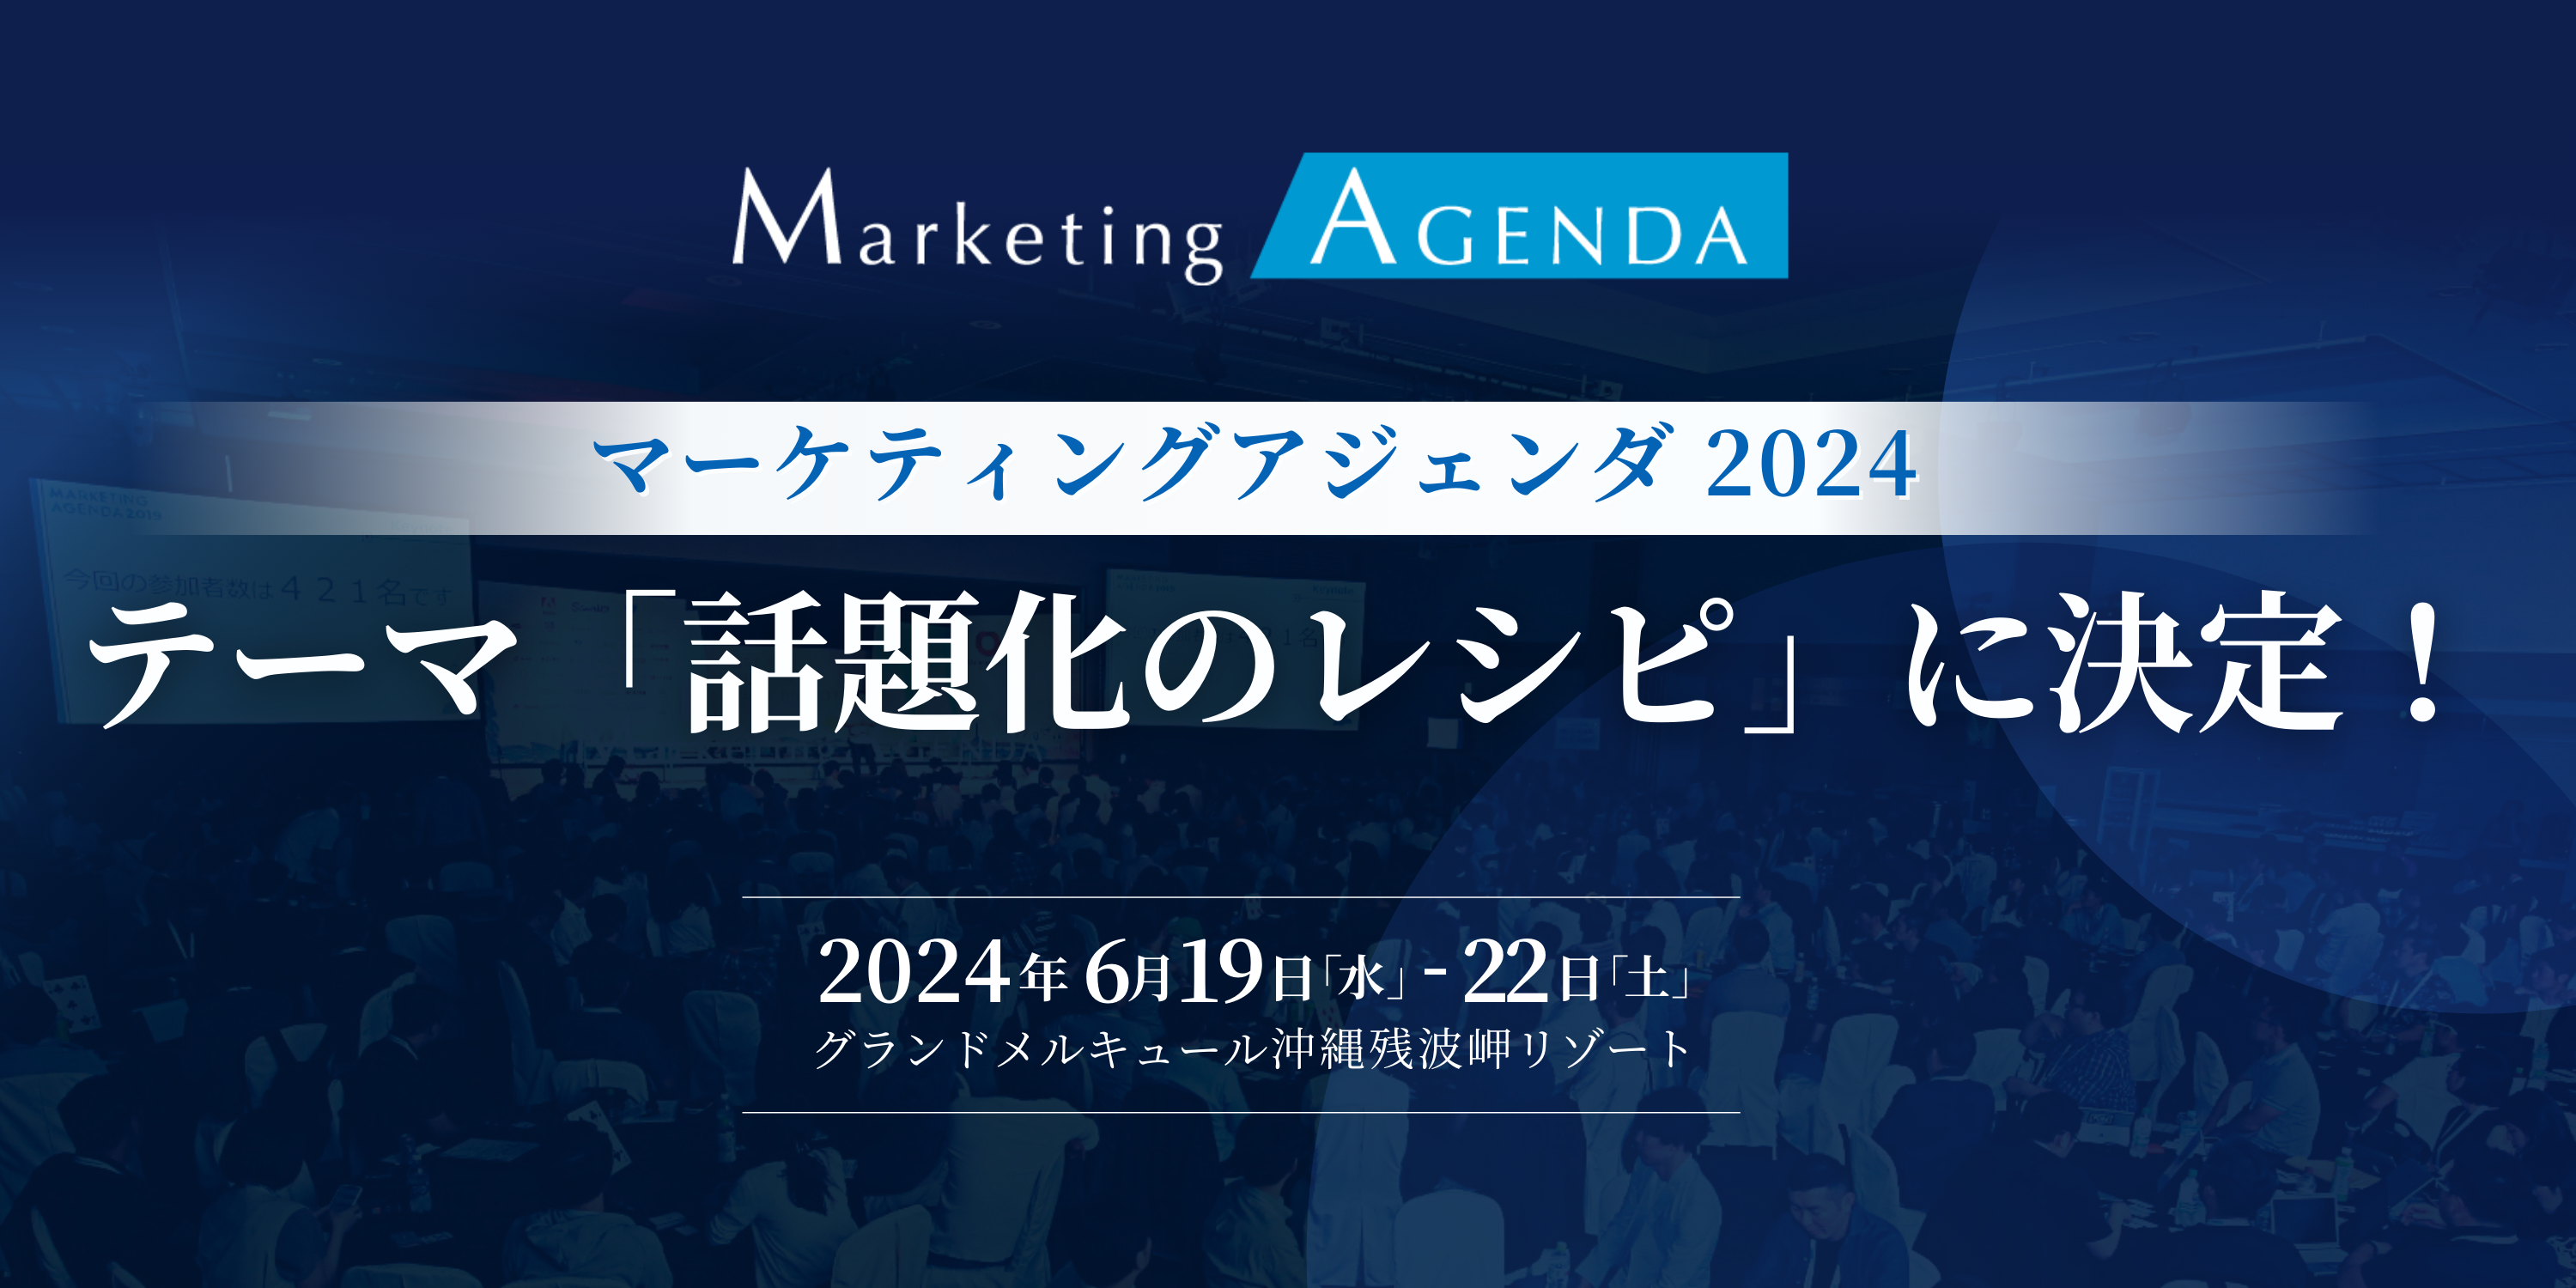 Marketing Agenda @ 2024. 5 . 25 - 25 ＠ Royal Hotel OKINAWA ZANPAMISAKI